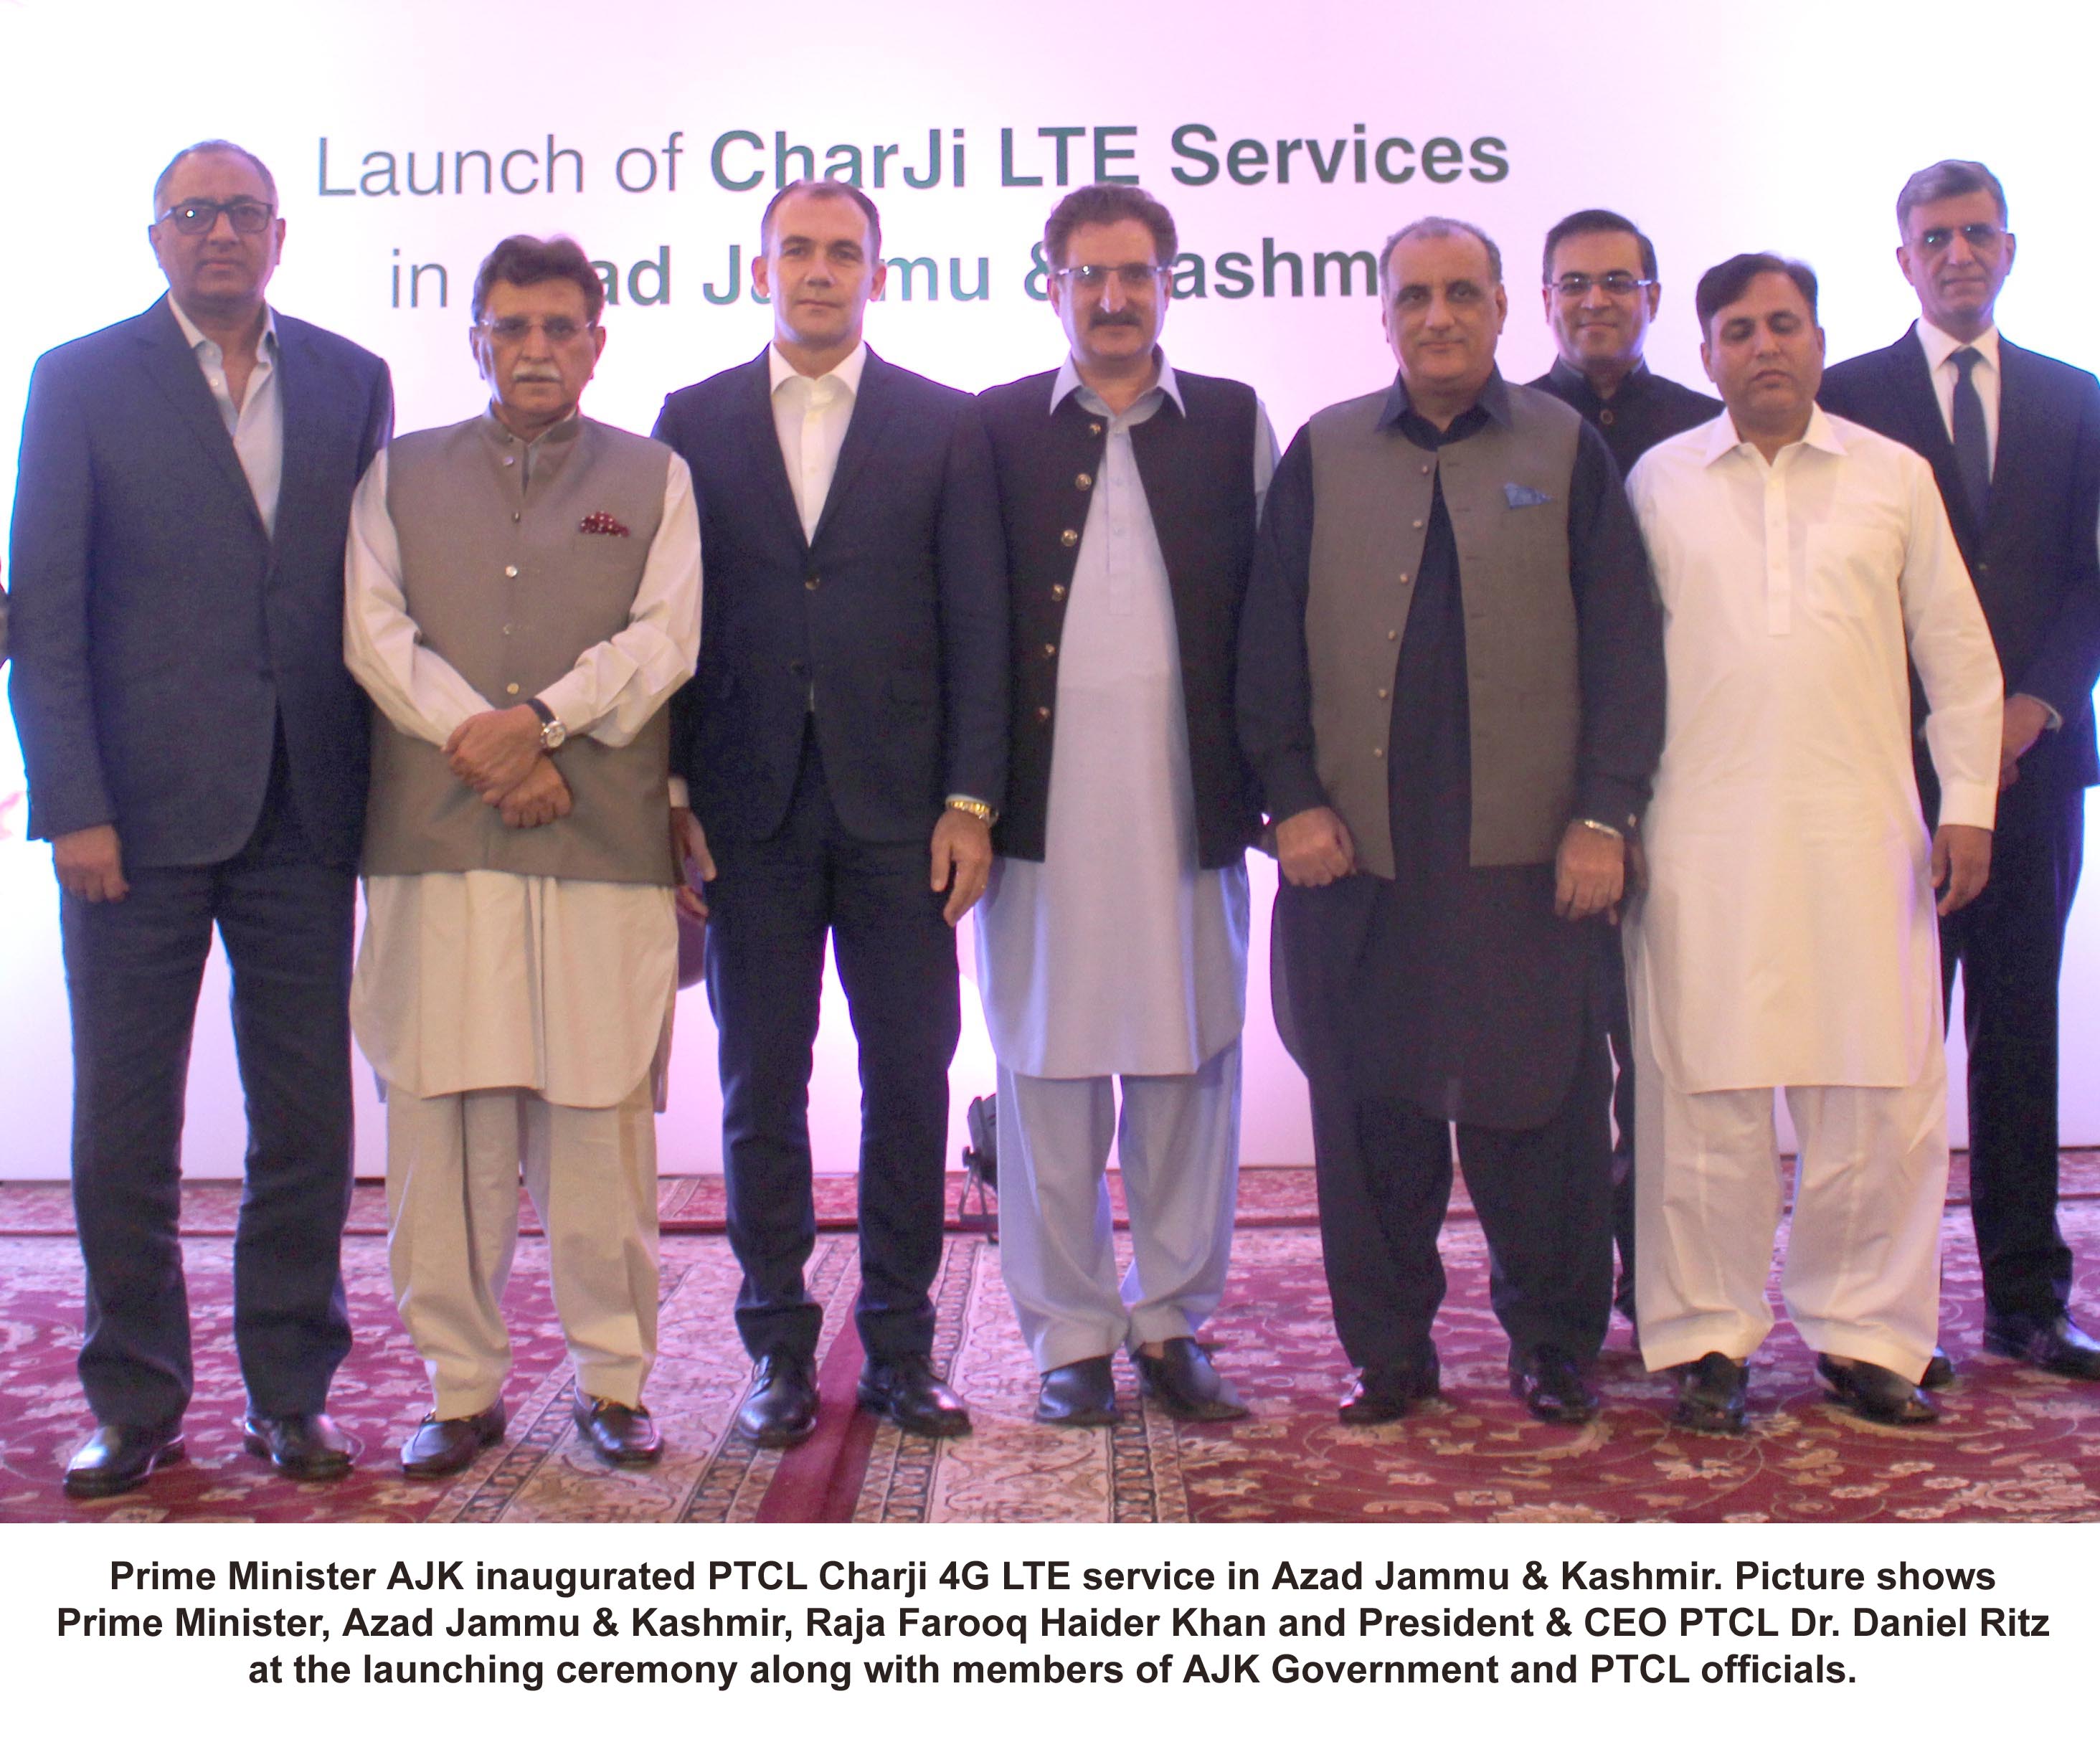 AJK PM Inaugurates PTCL Charji 4G LTE Service in Azad Jammu & Kashmir